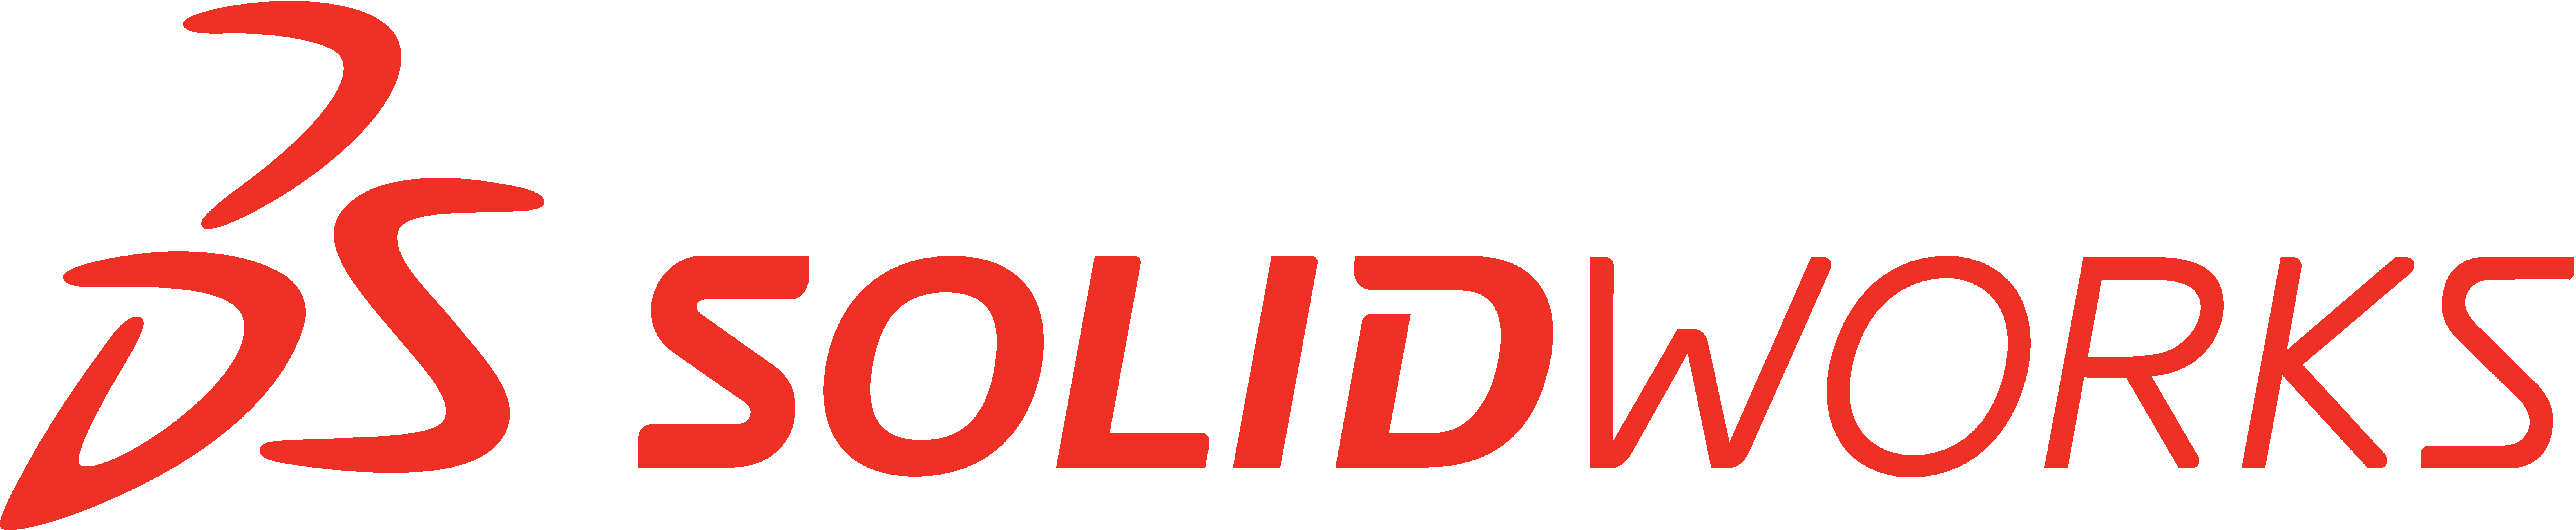 Solidworks Logos